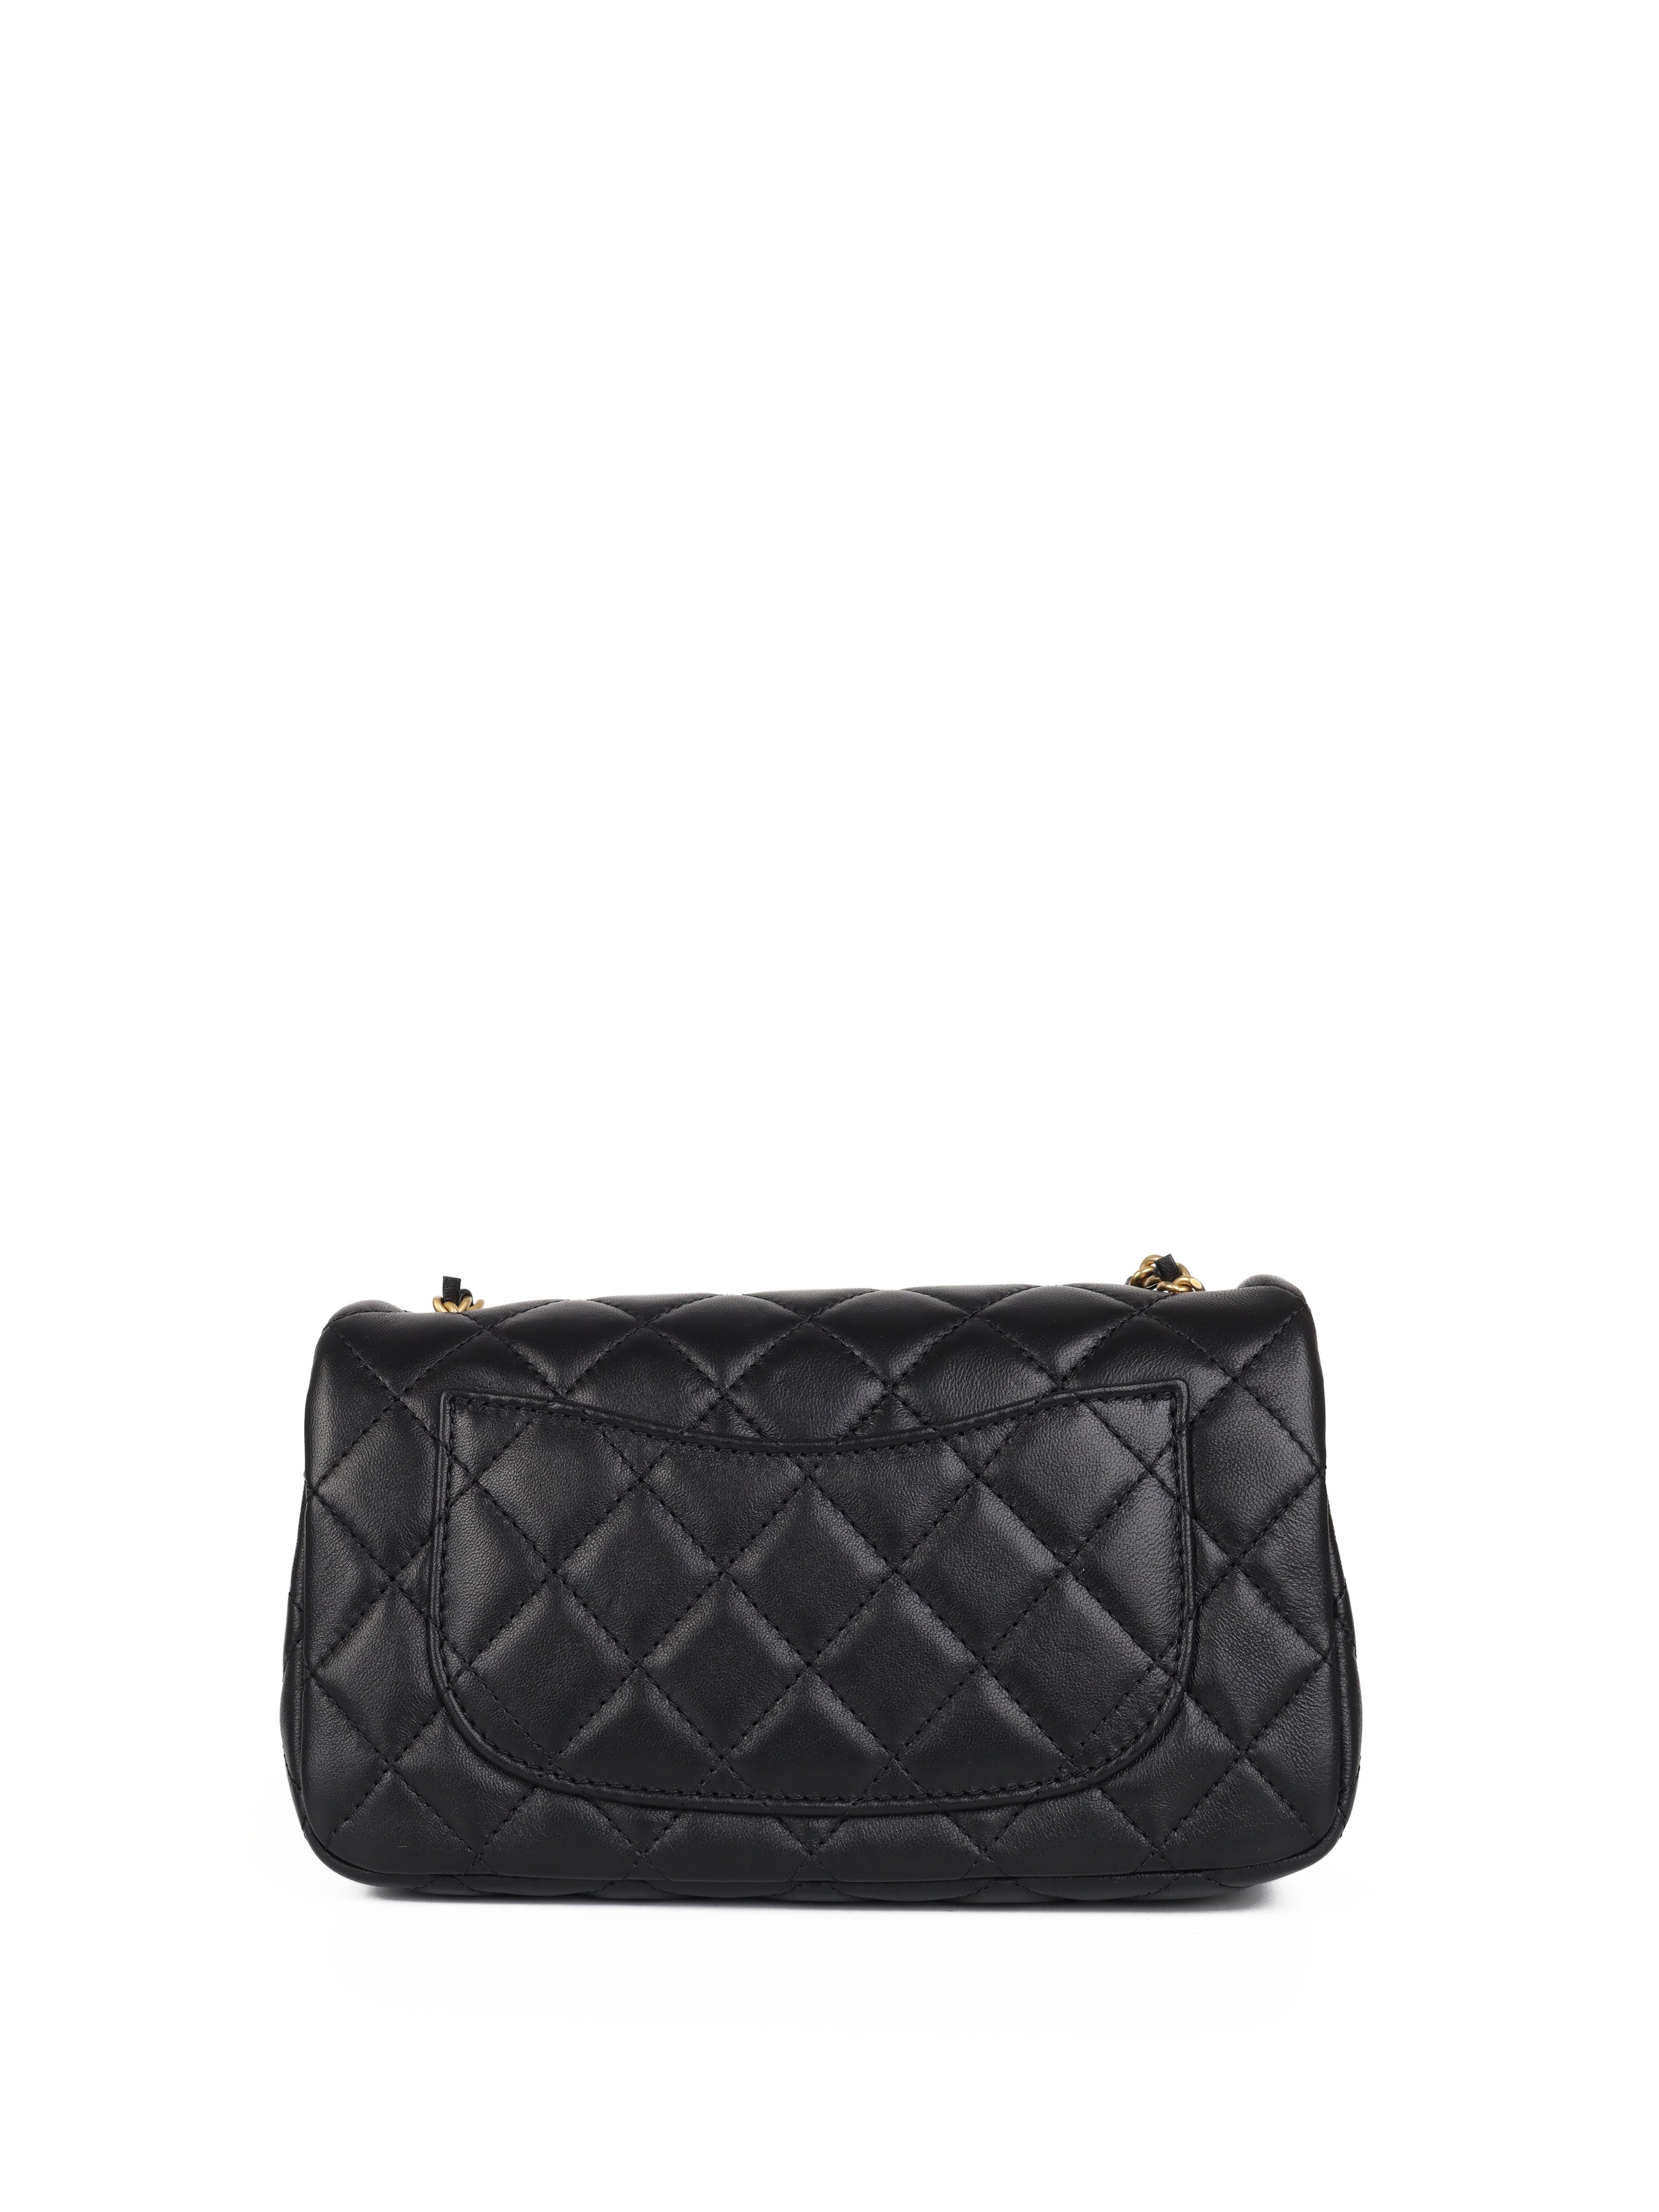 Chanel Black Mini Classic Flap Bag with Pearl Crush